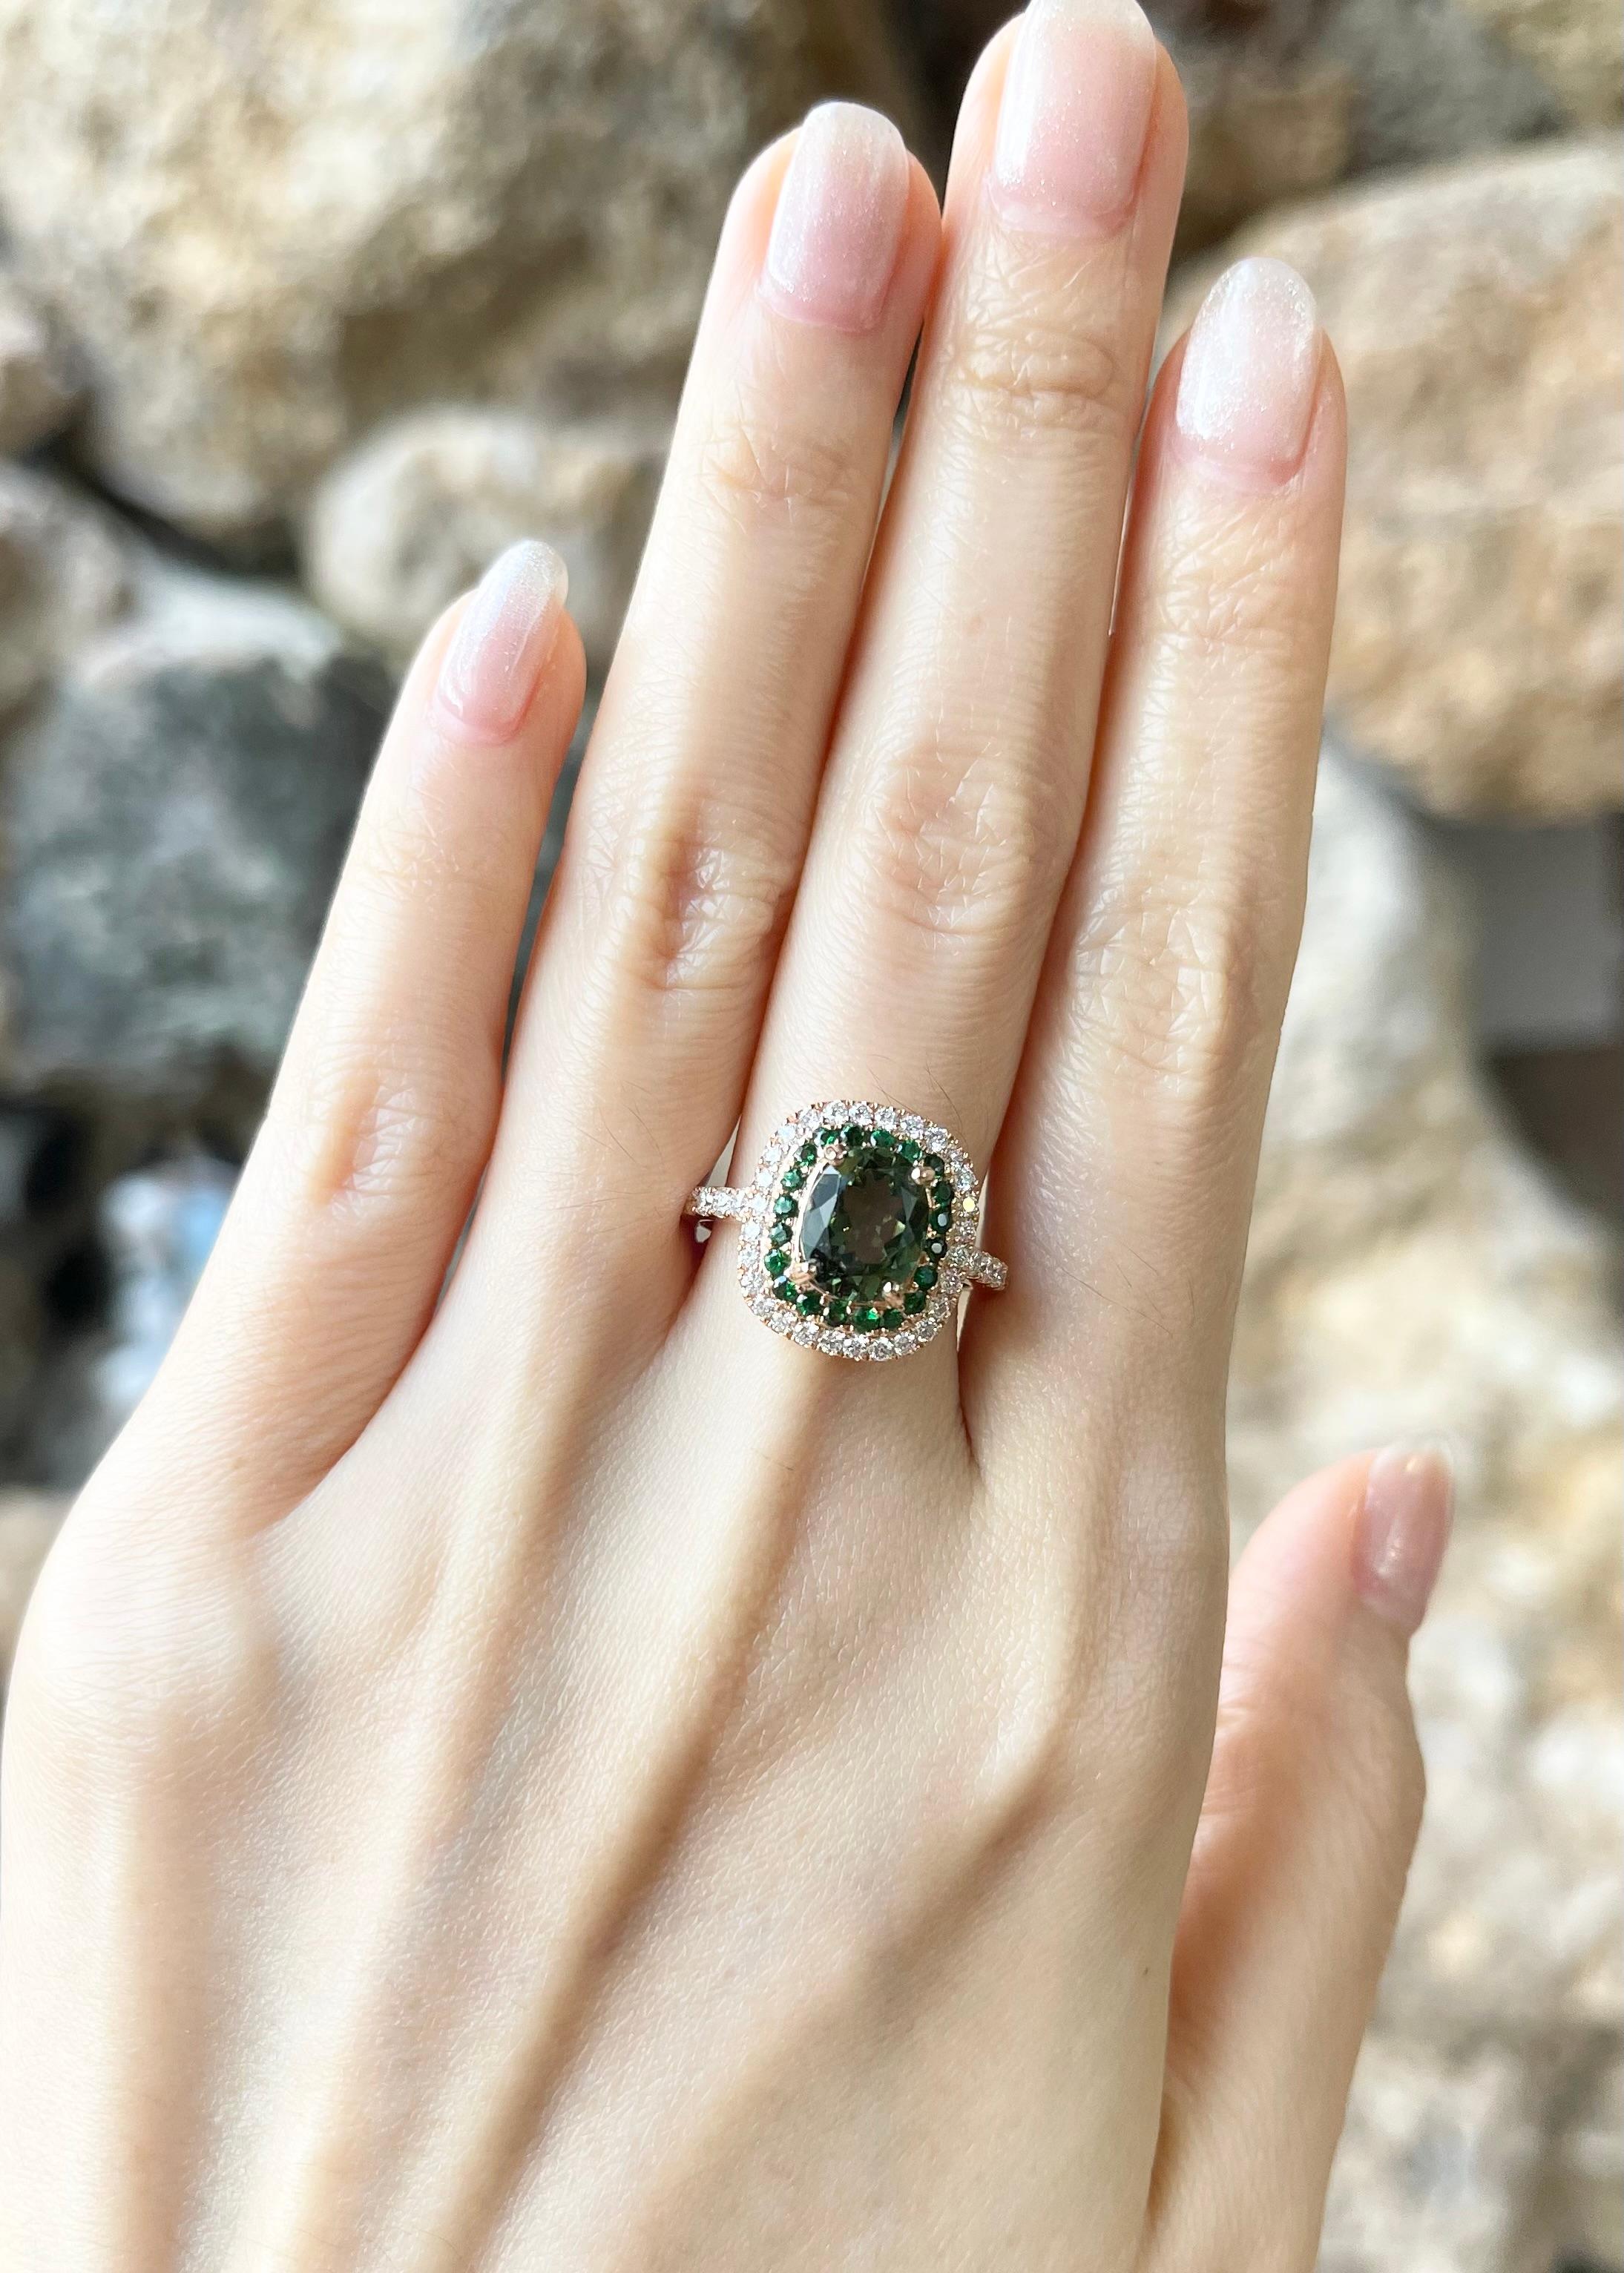 Green Sapphire 1.83 carats, Tsavorite 0.40 carat and Diamond 0.58 carat Ring set in 18K Rose Gold Settings

Width:  1.3 cm 
Length: 1.5 cm
Ring Size: 54
Total Weight: 5.48 grams

